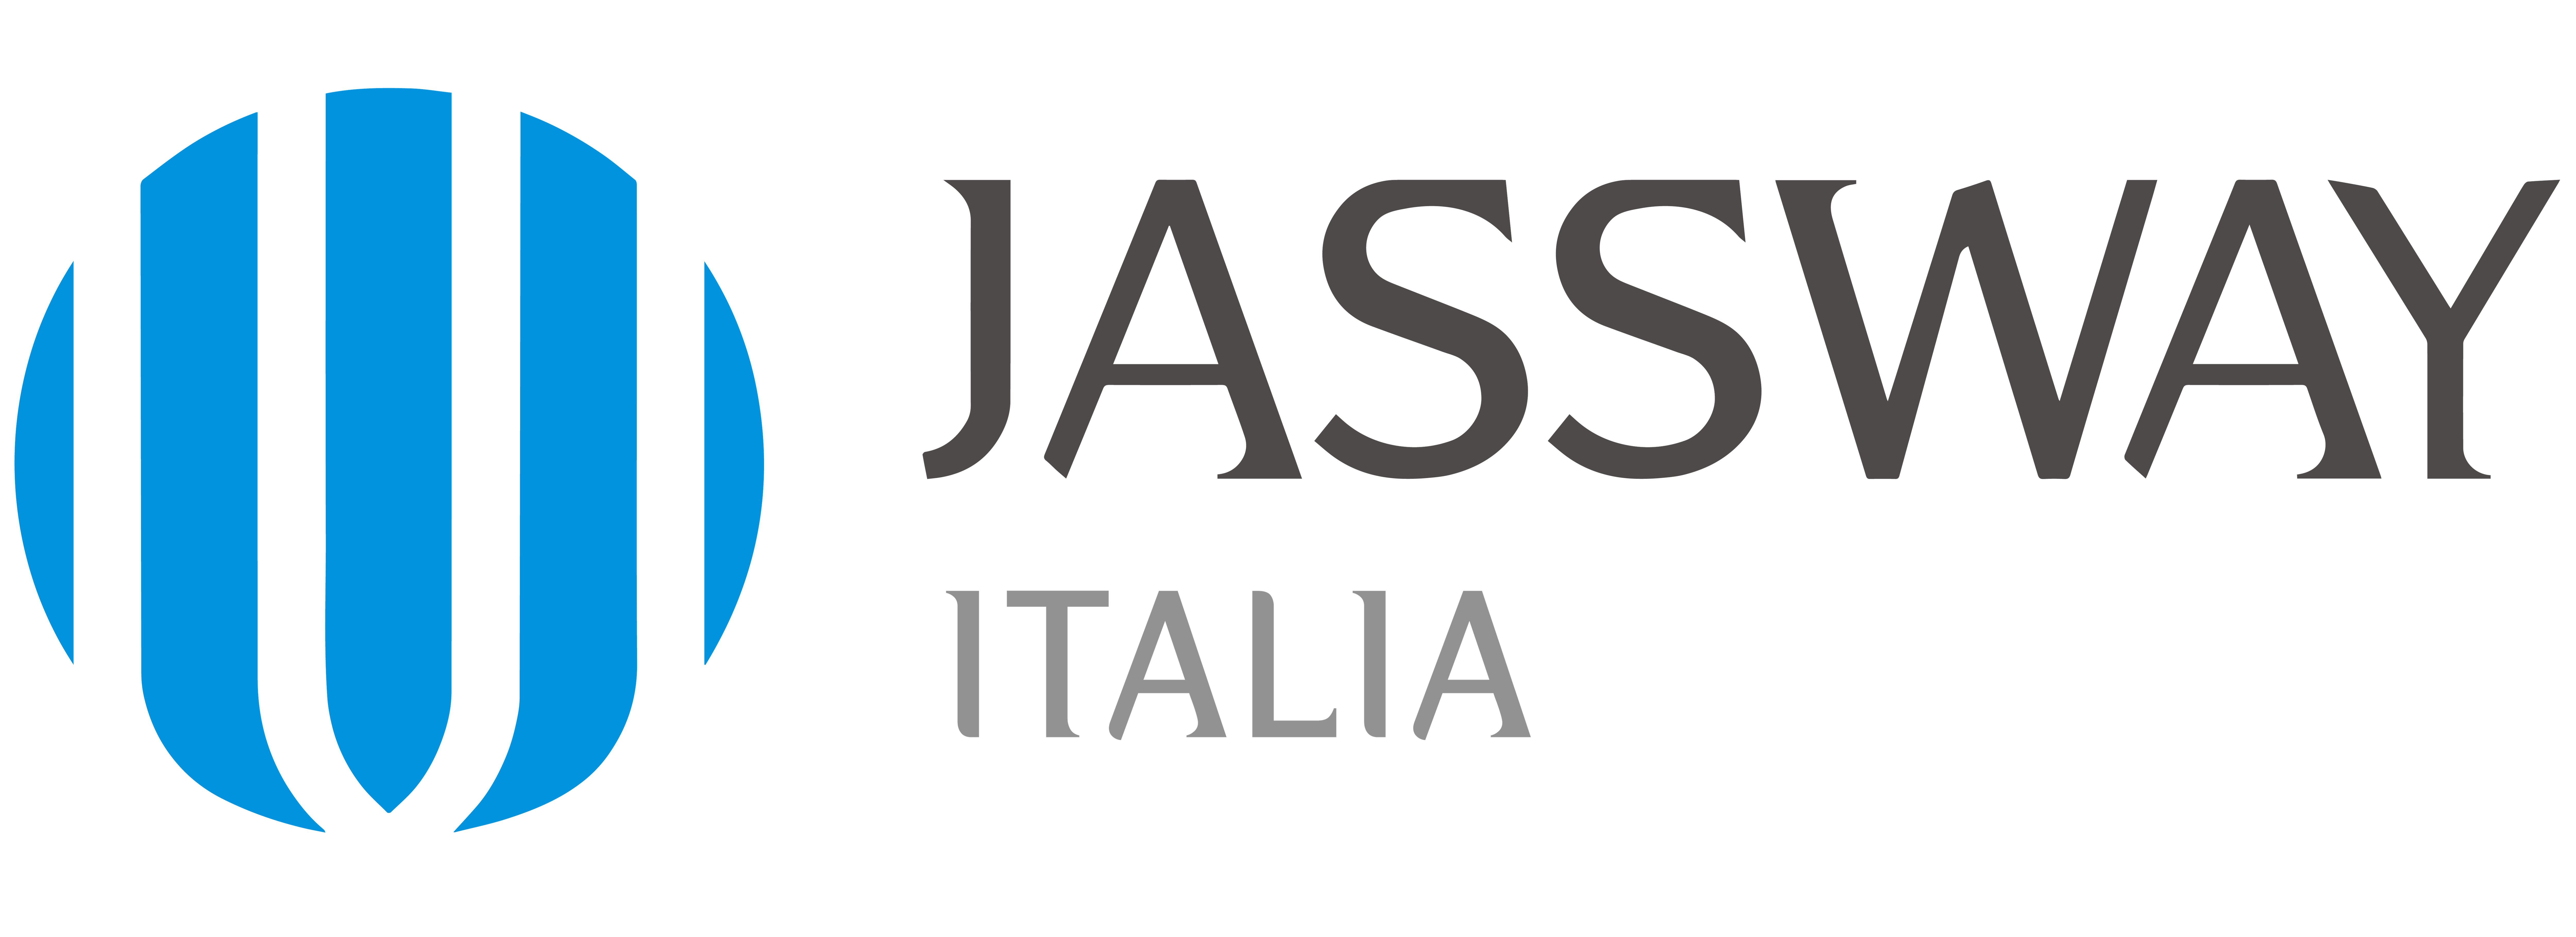 Jassway Italia